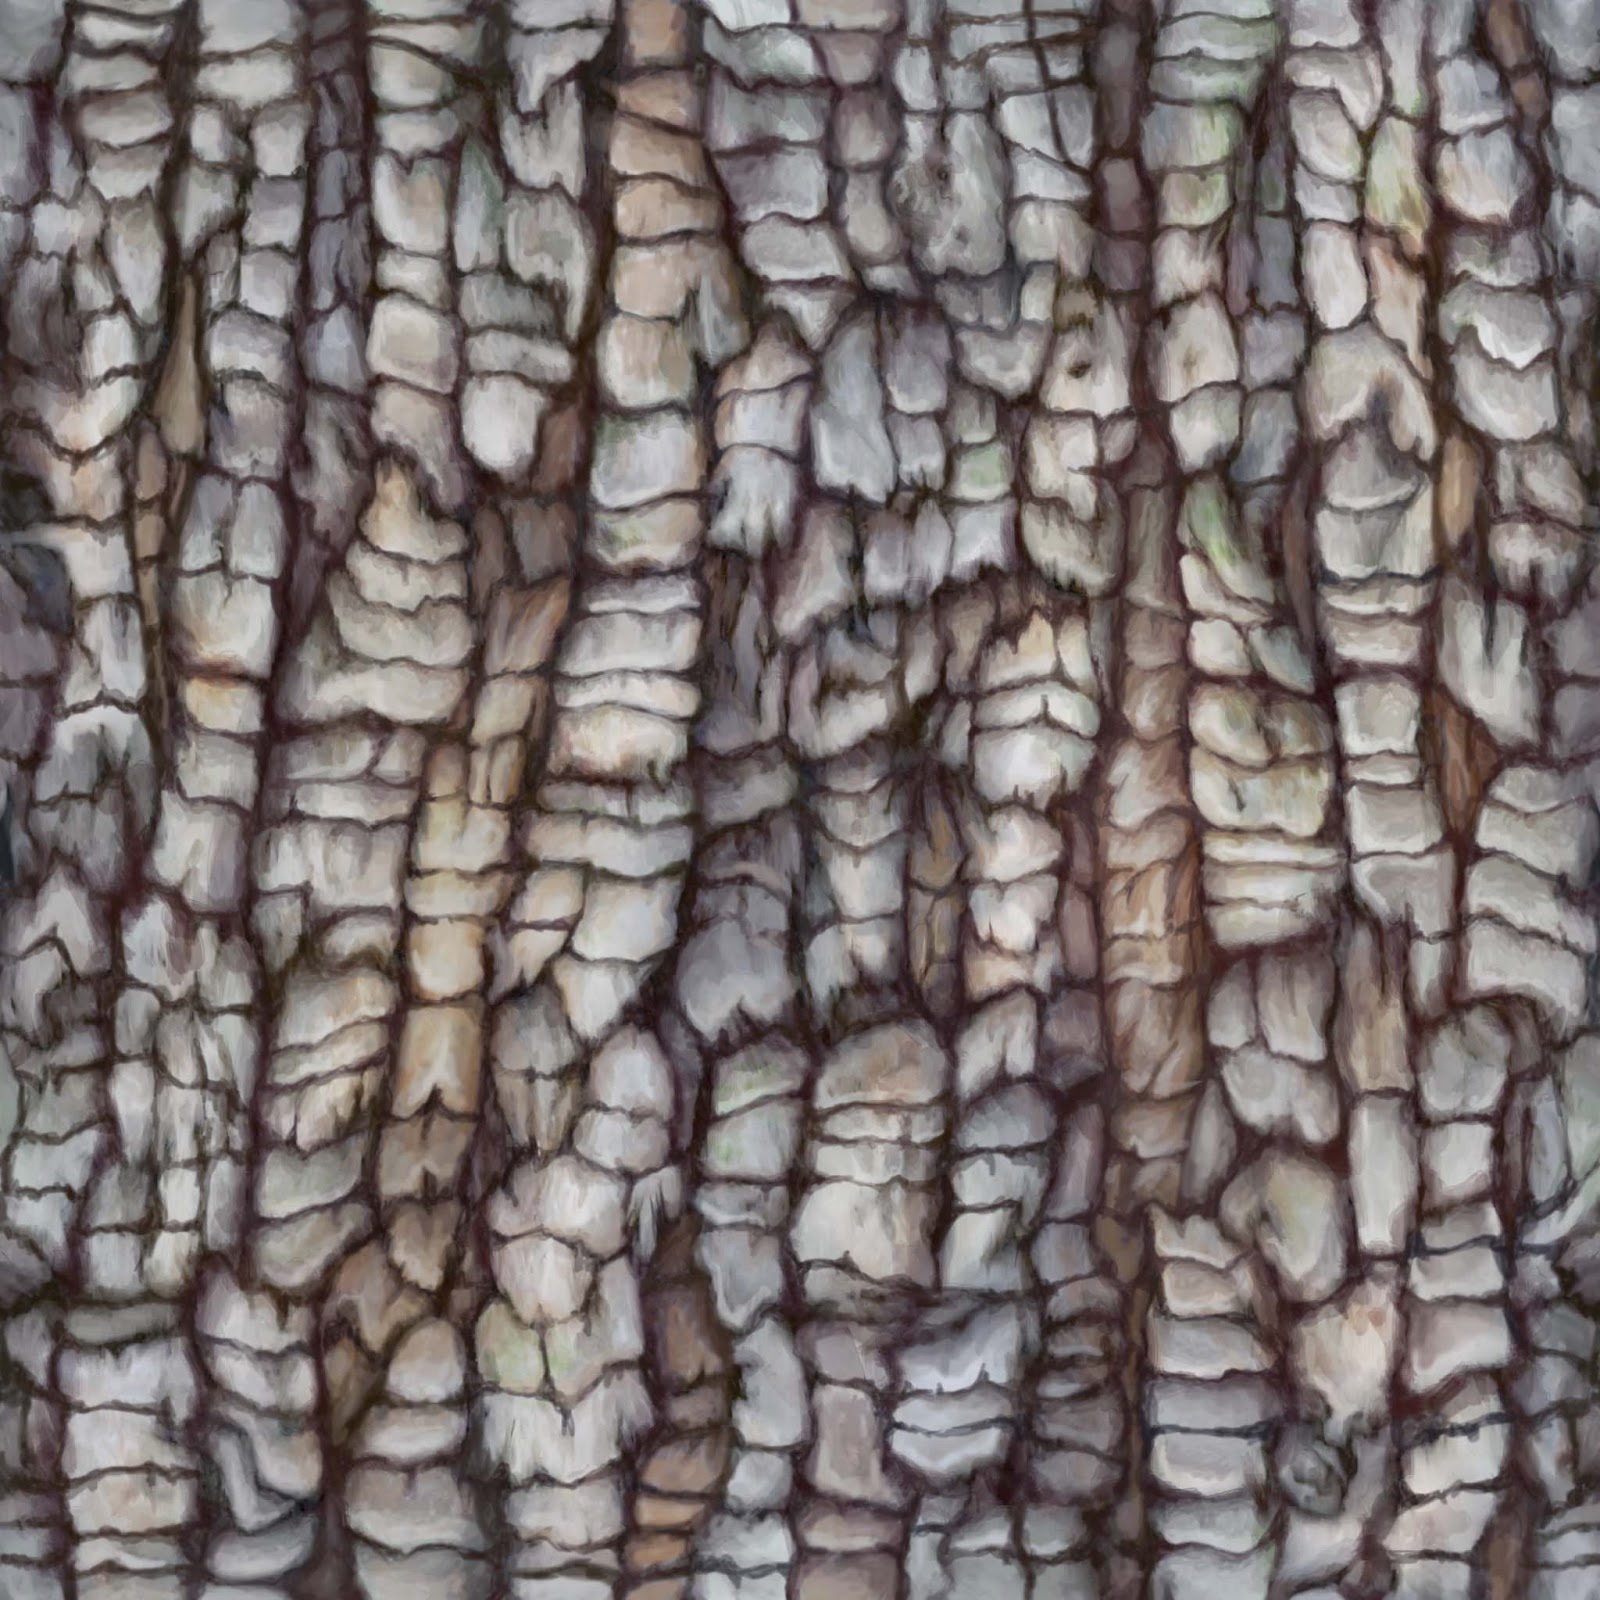 Tree Bark Texture Drawing at GetDrawings Free download